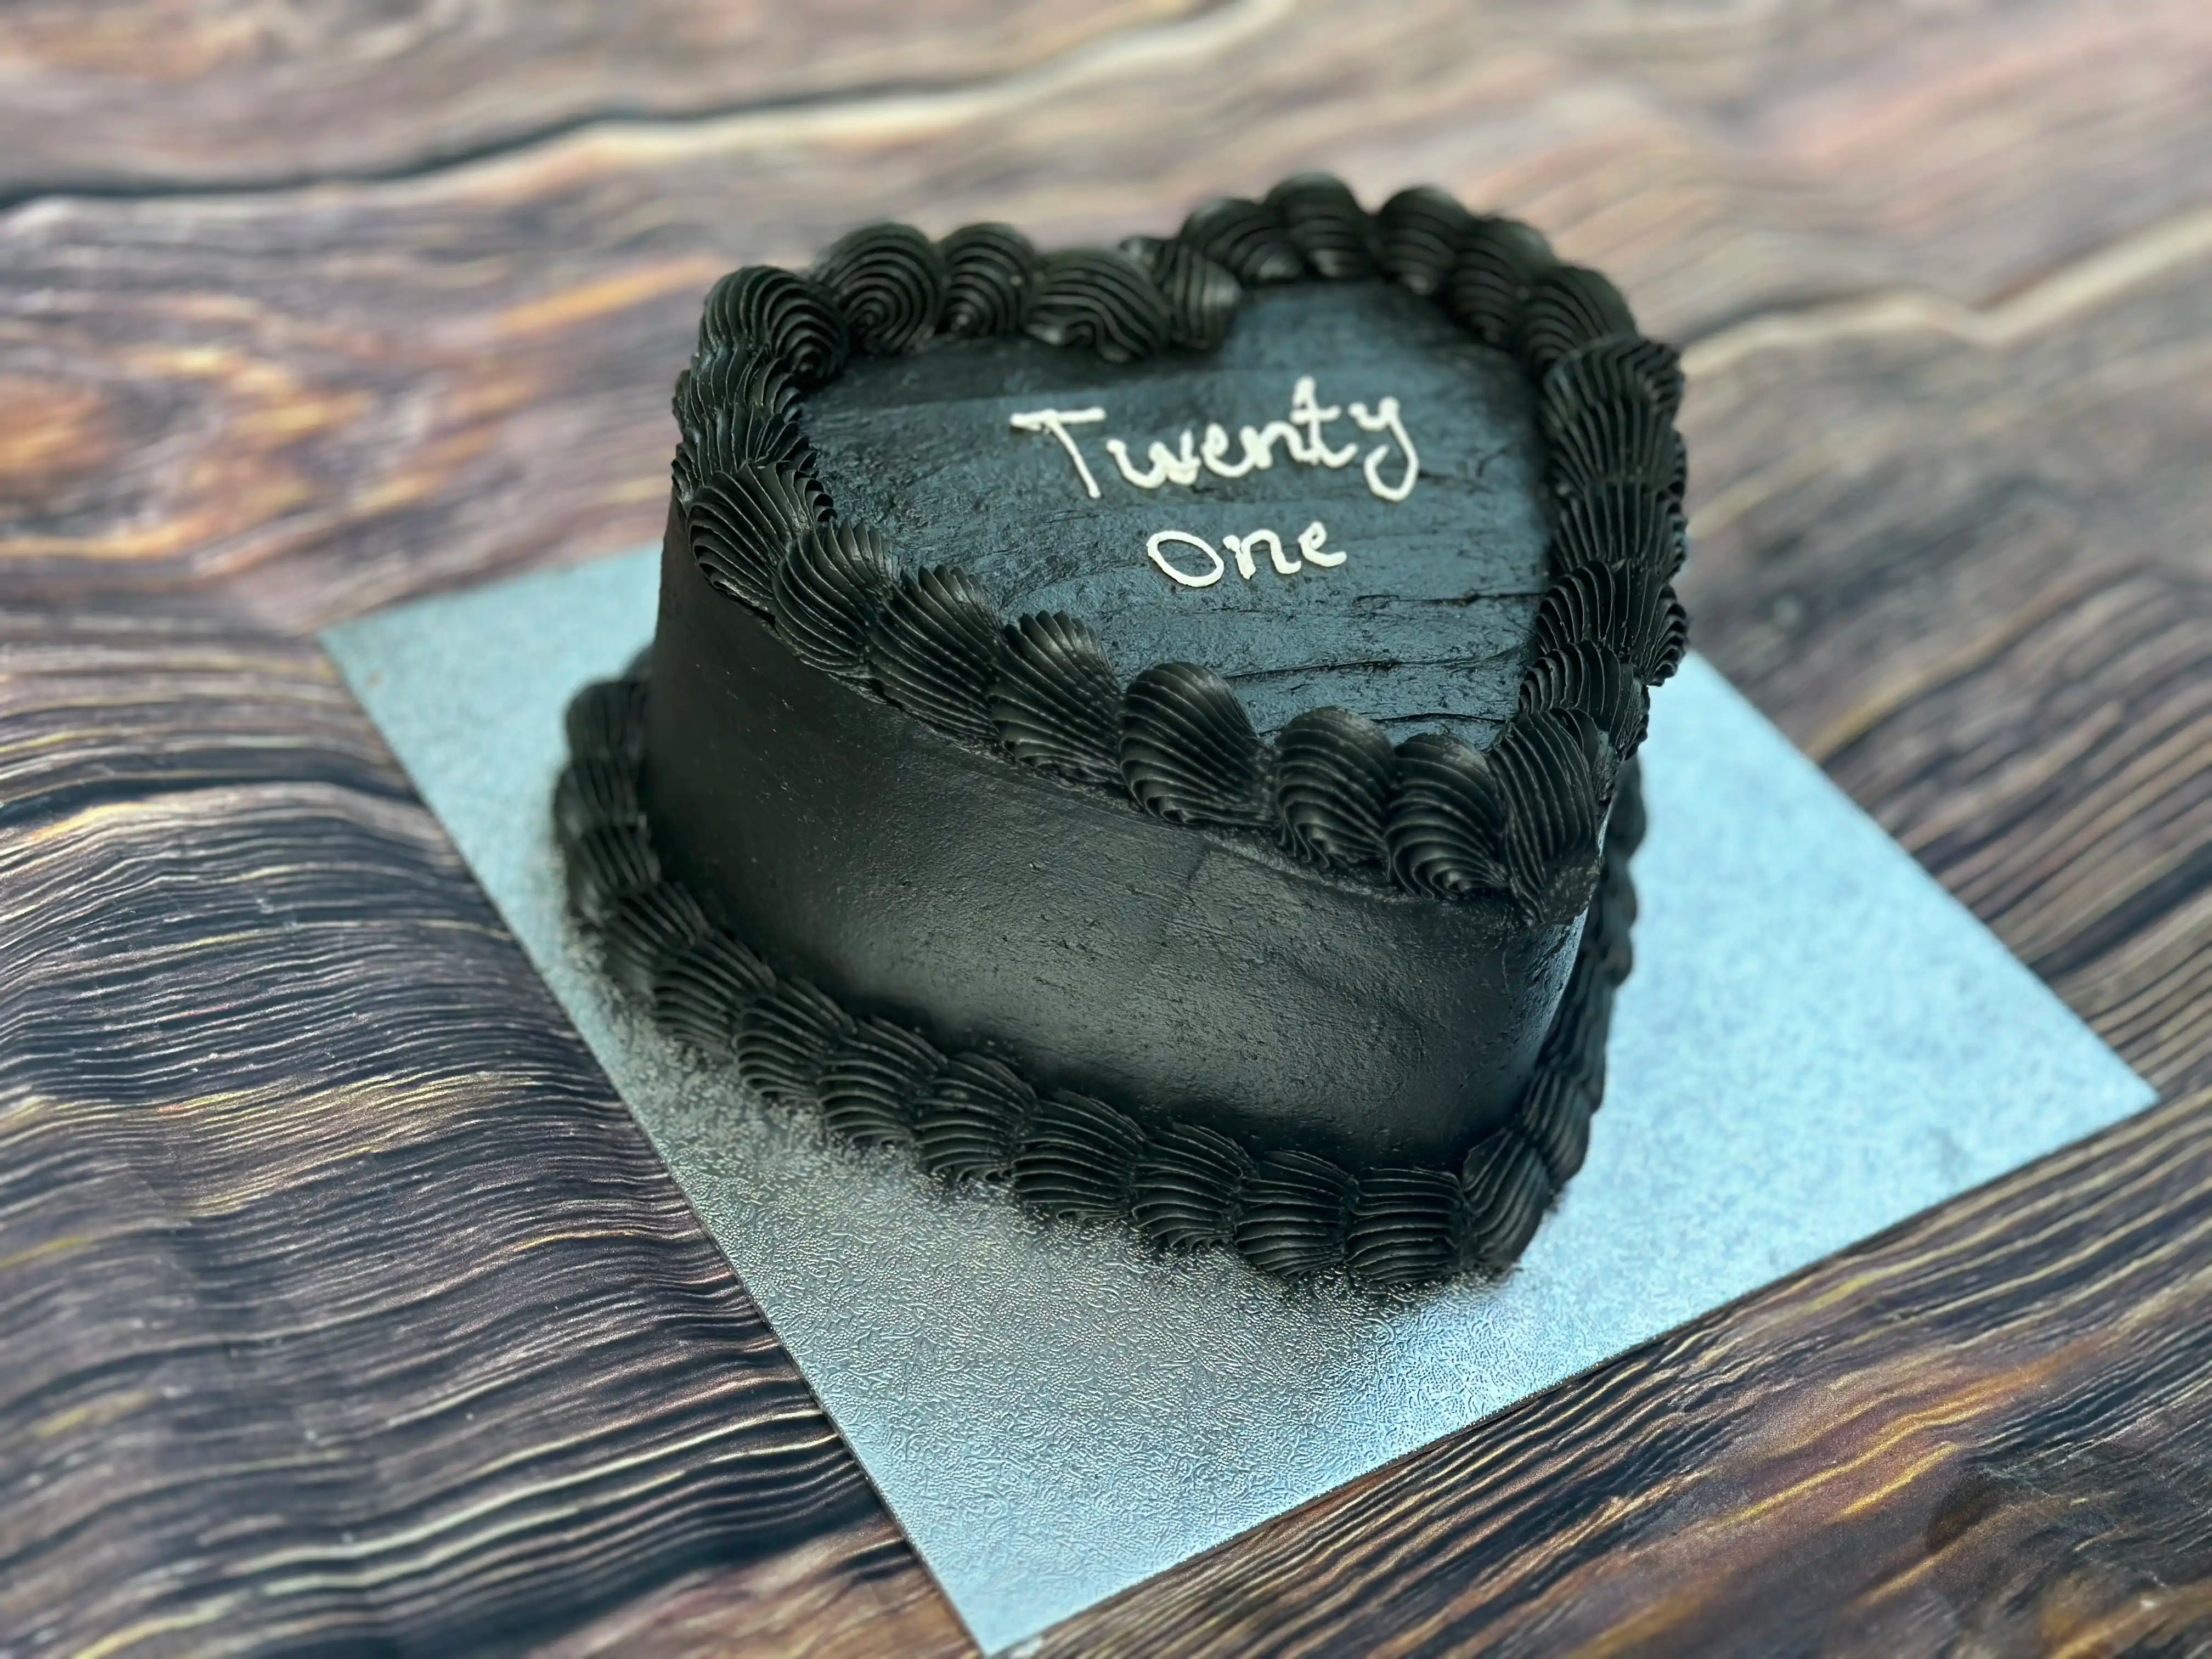 Heart shaped cake, vintage heart cake, black birthday cake, minimalist cake,  aesthetic cake | Pretty birthday cakes, Mini cakes birthday, Vintage  birthday cakes